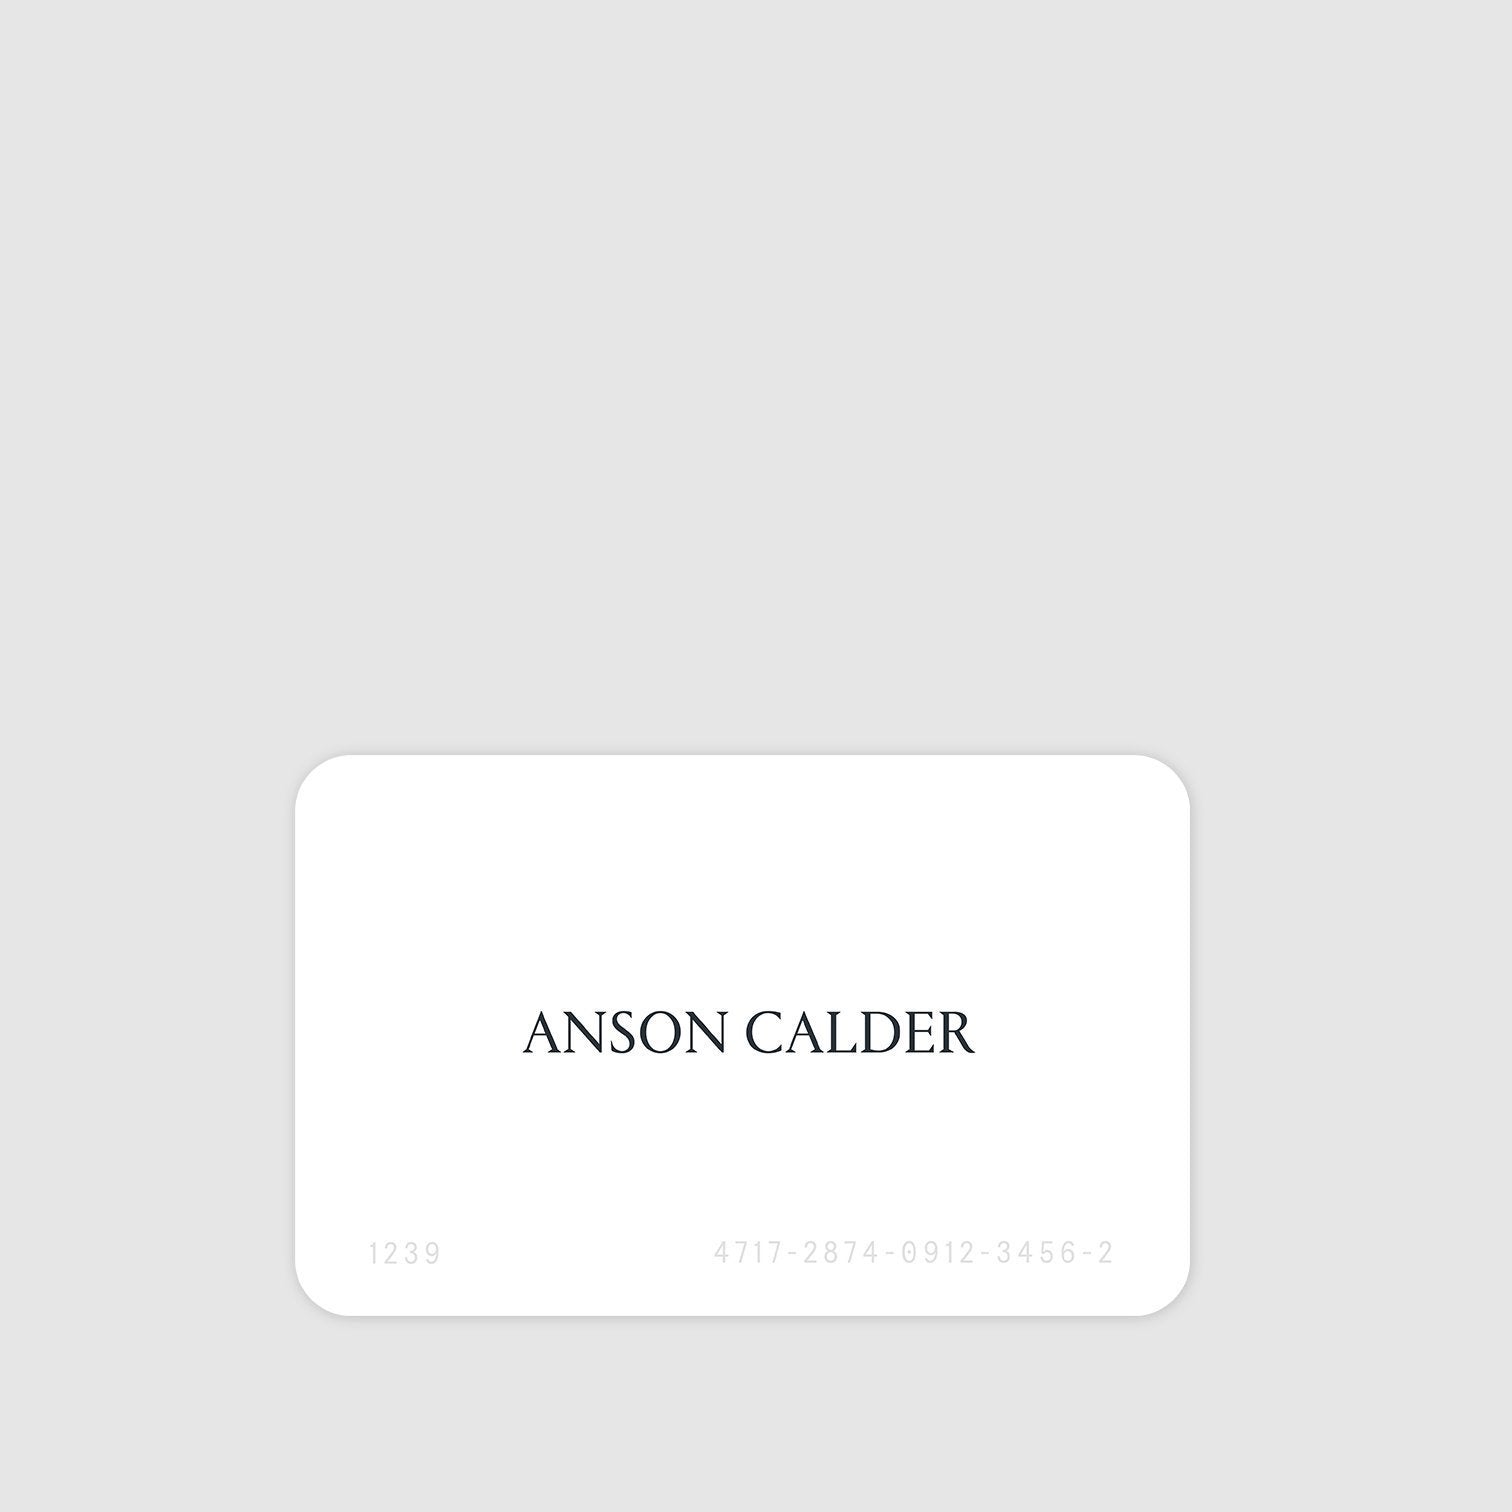 Moleskine® Notebook – ANSON CALDER